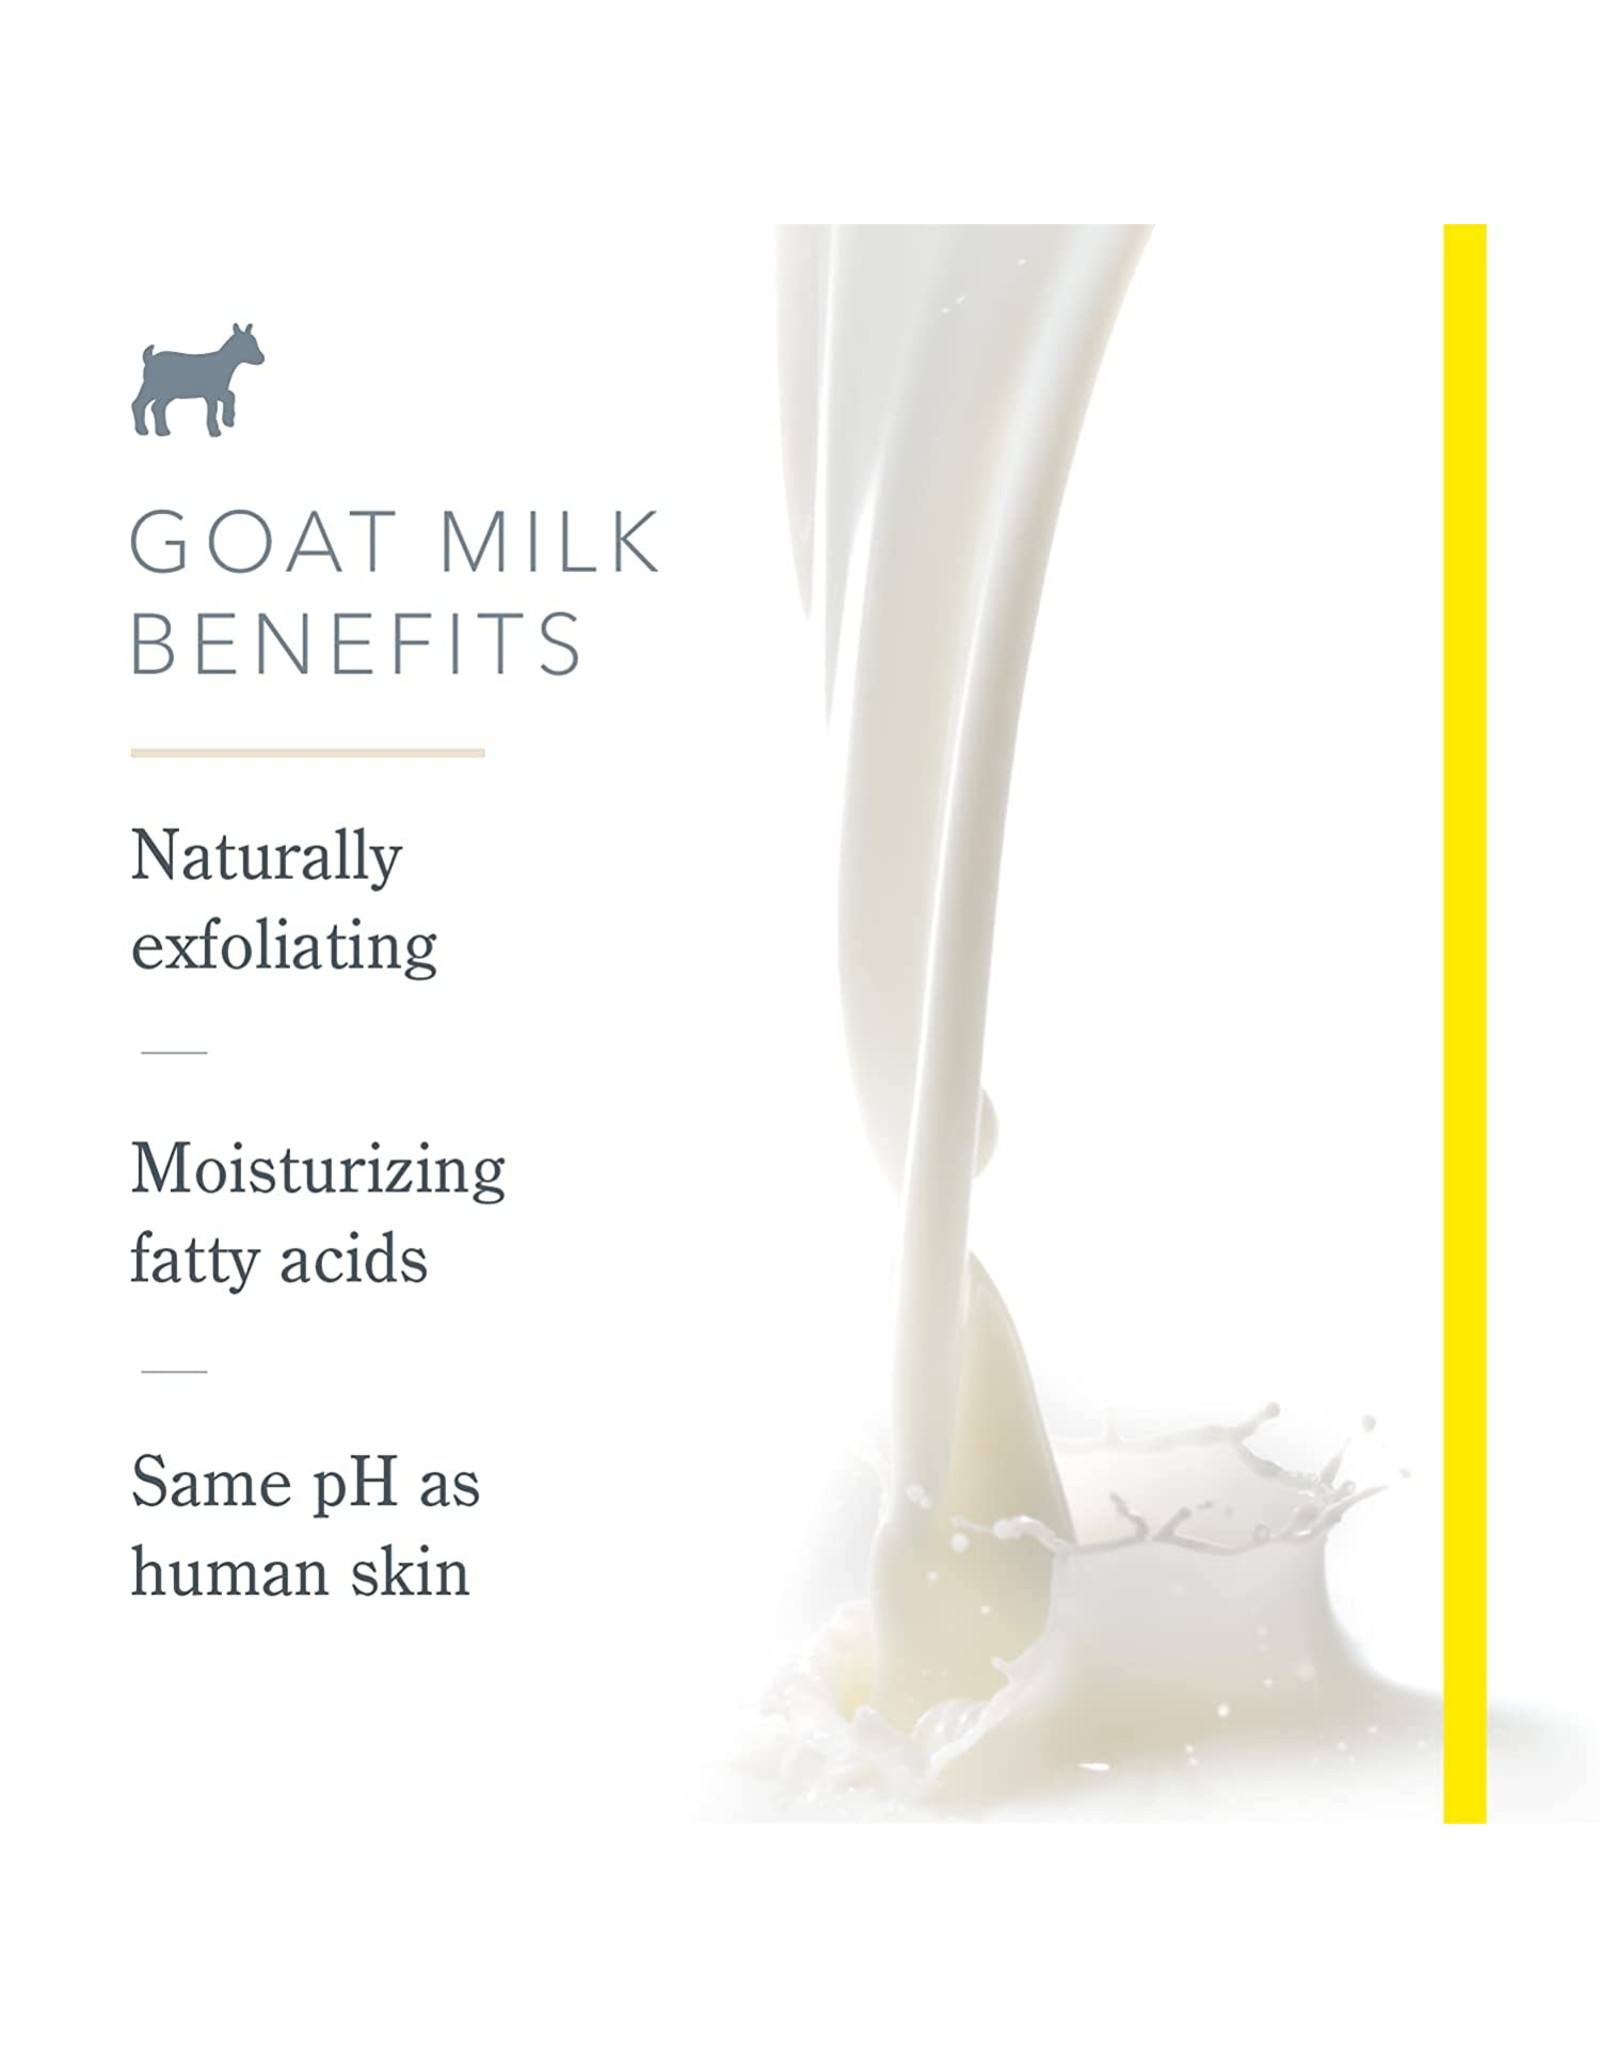 Beekman 1802 Goat Milk Bar Soap 9oz HONEY & OATS Scent